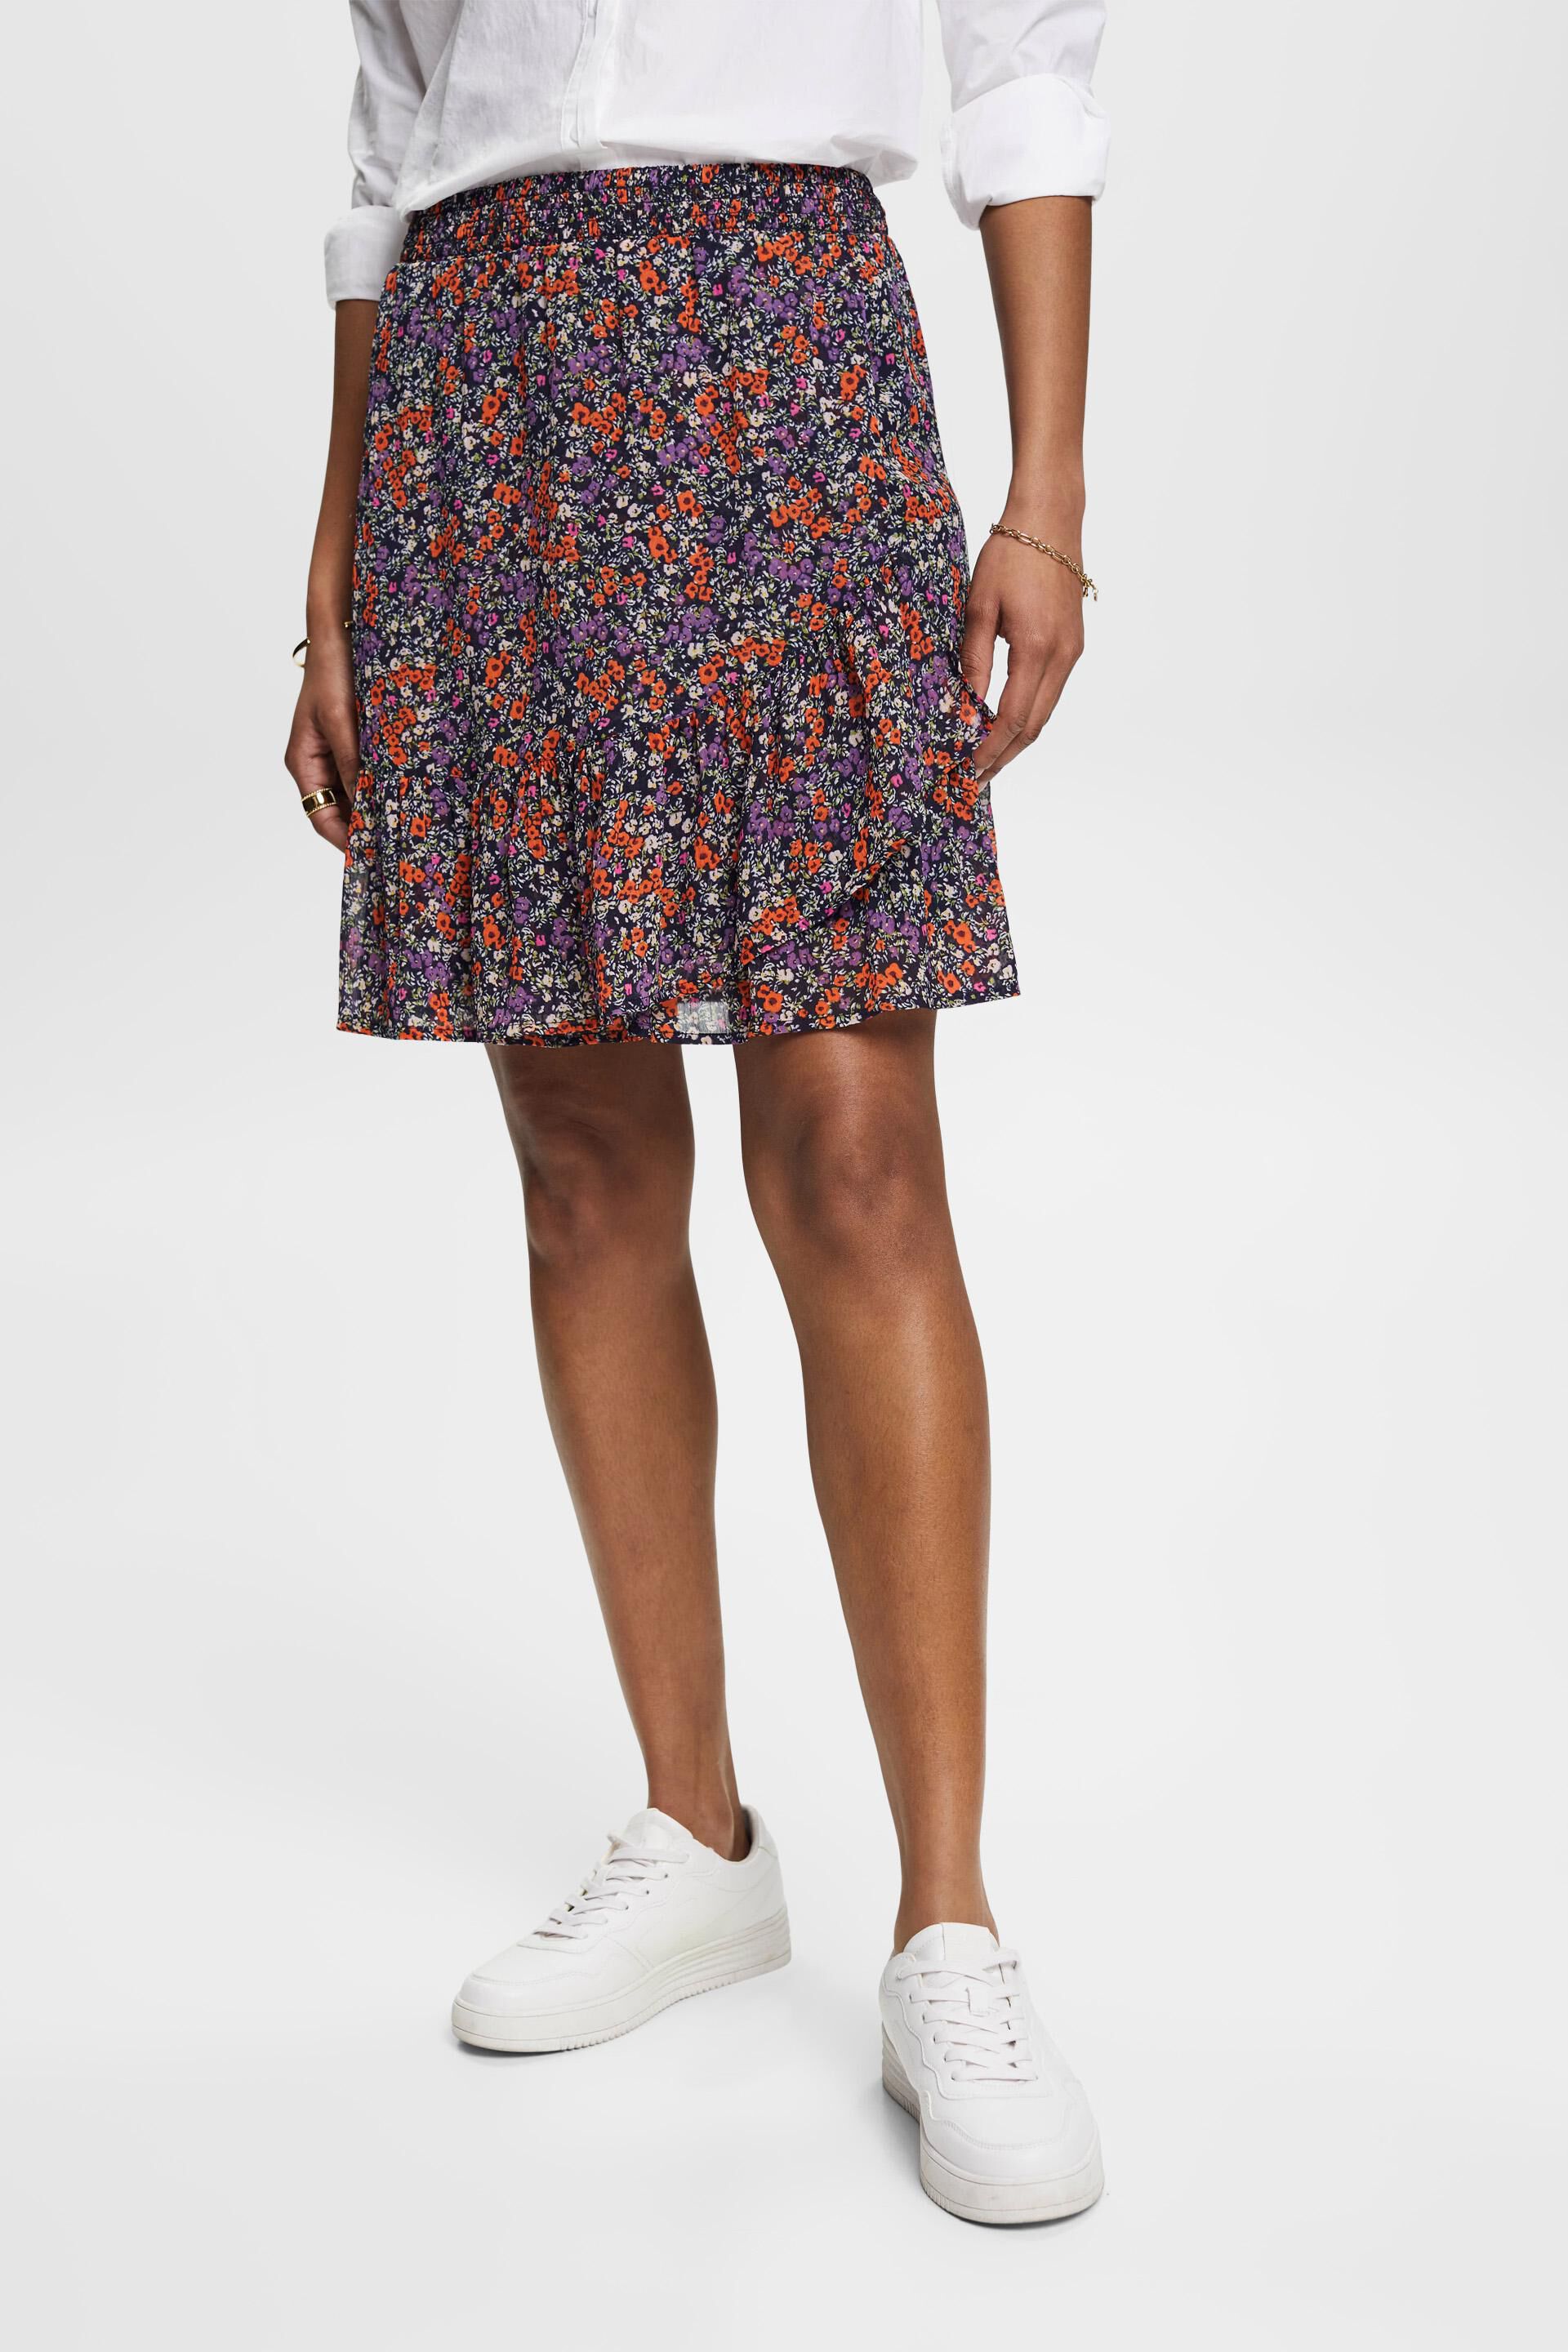 ESPRIT - Floral skirt flounced hem at our online